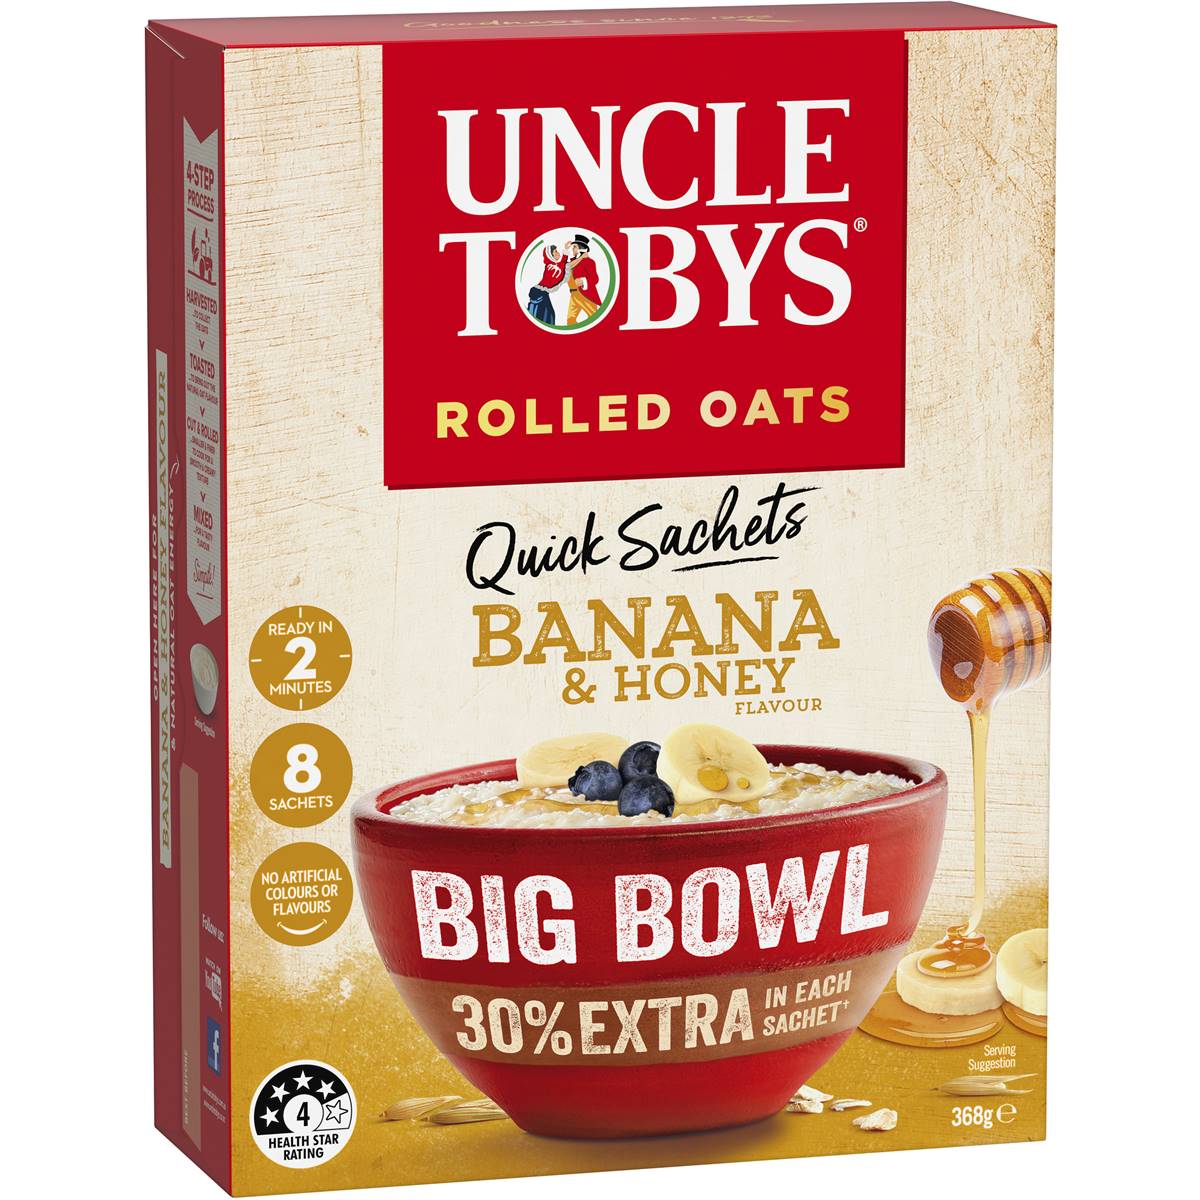 Calories in Uncle Tobys Oats Quick Sachets Big Bowl Banana & Honey Porridge